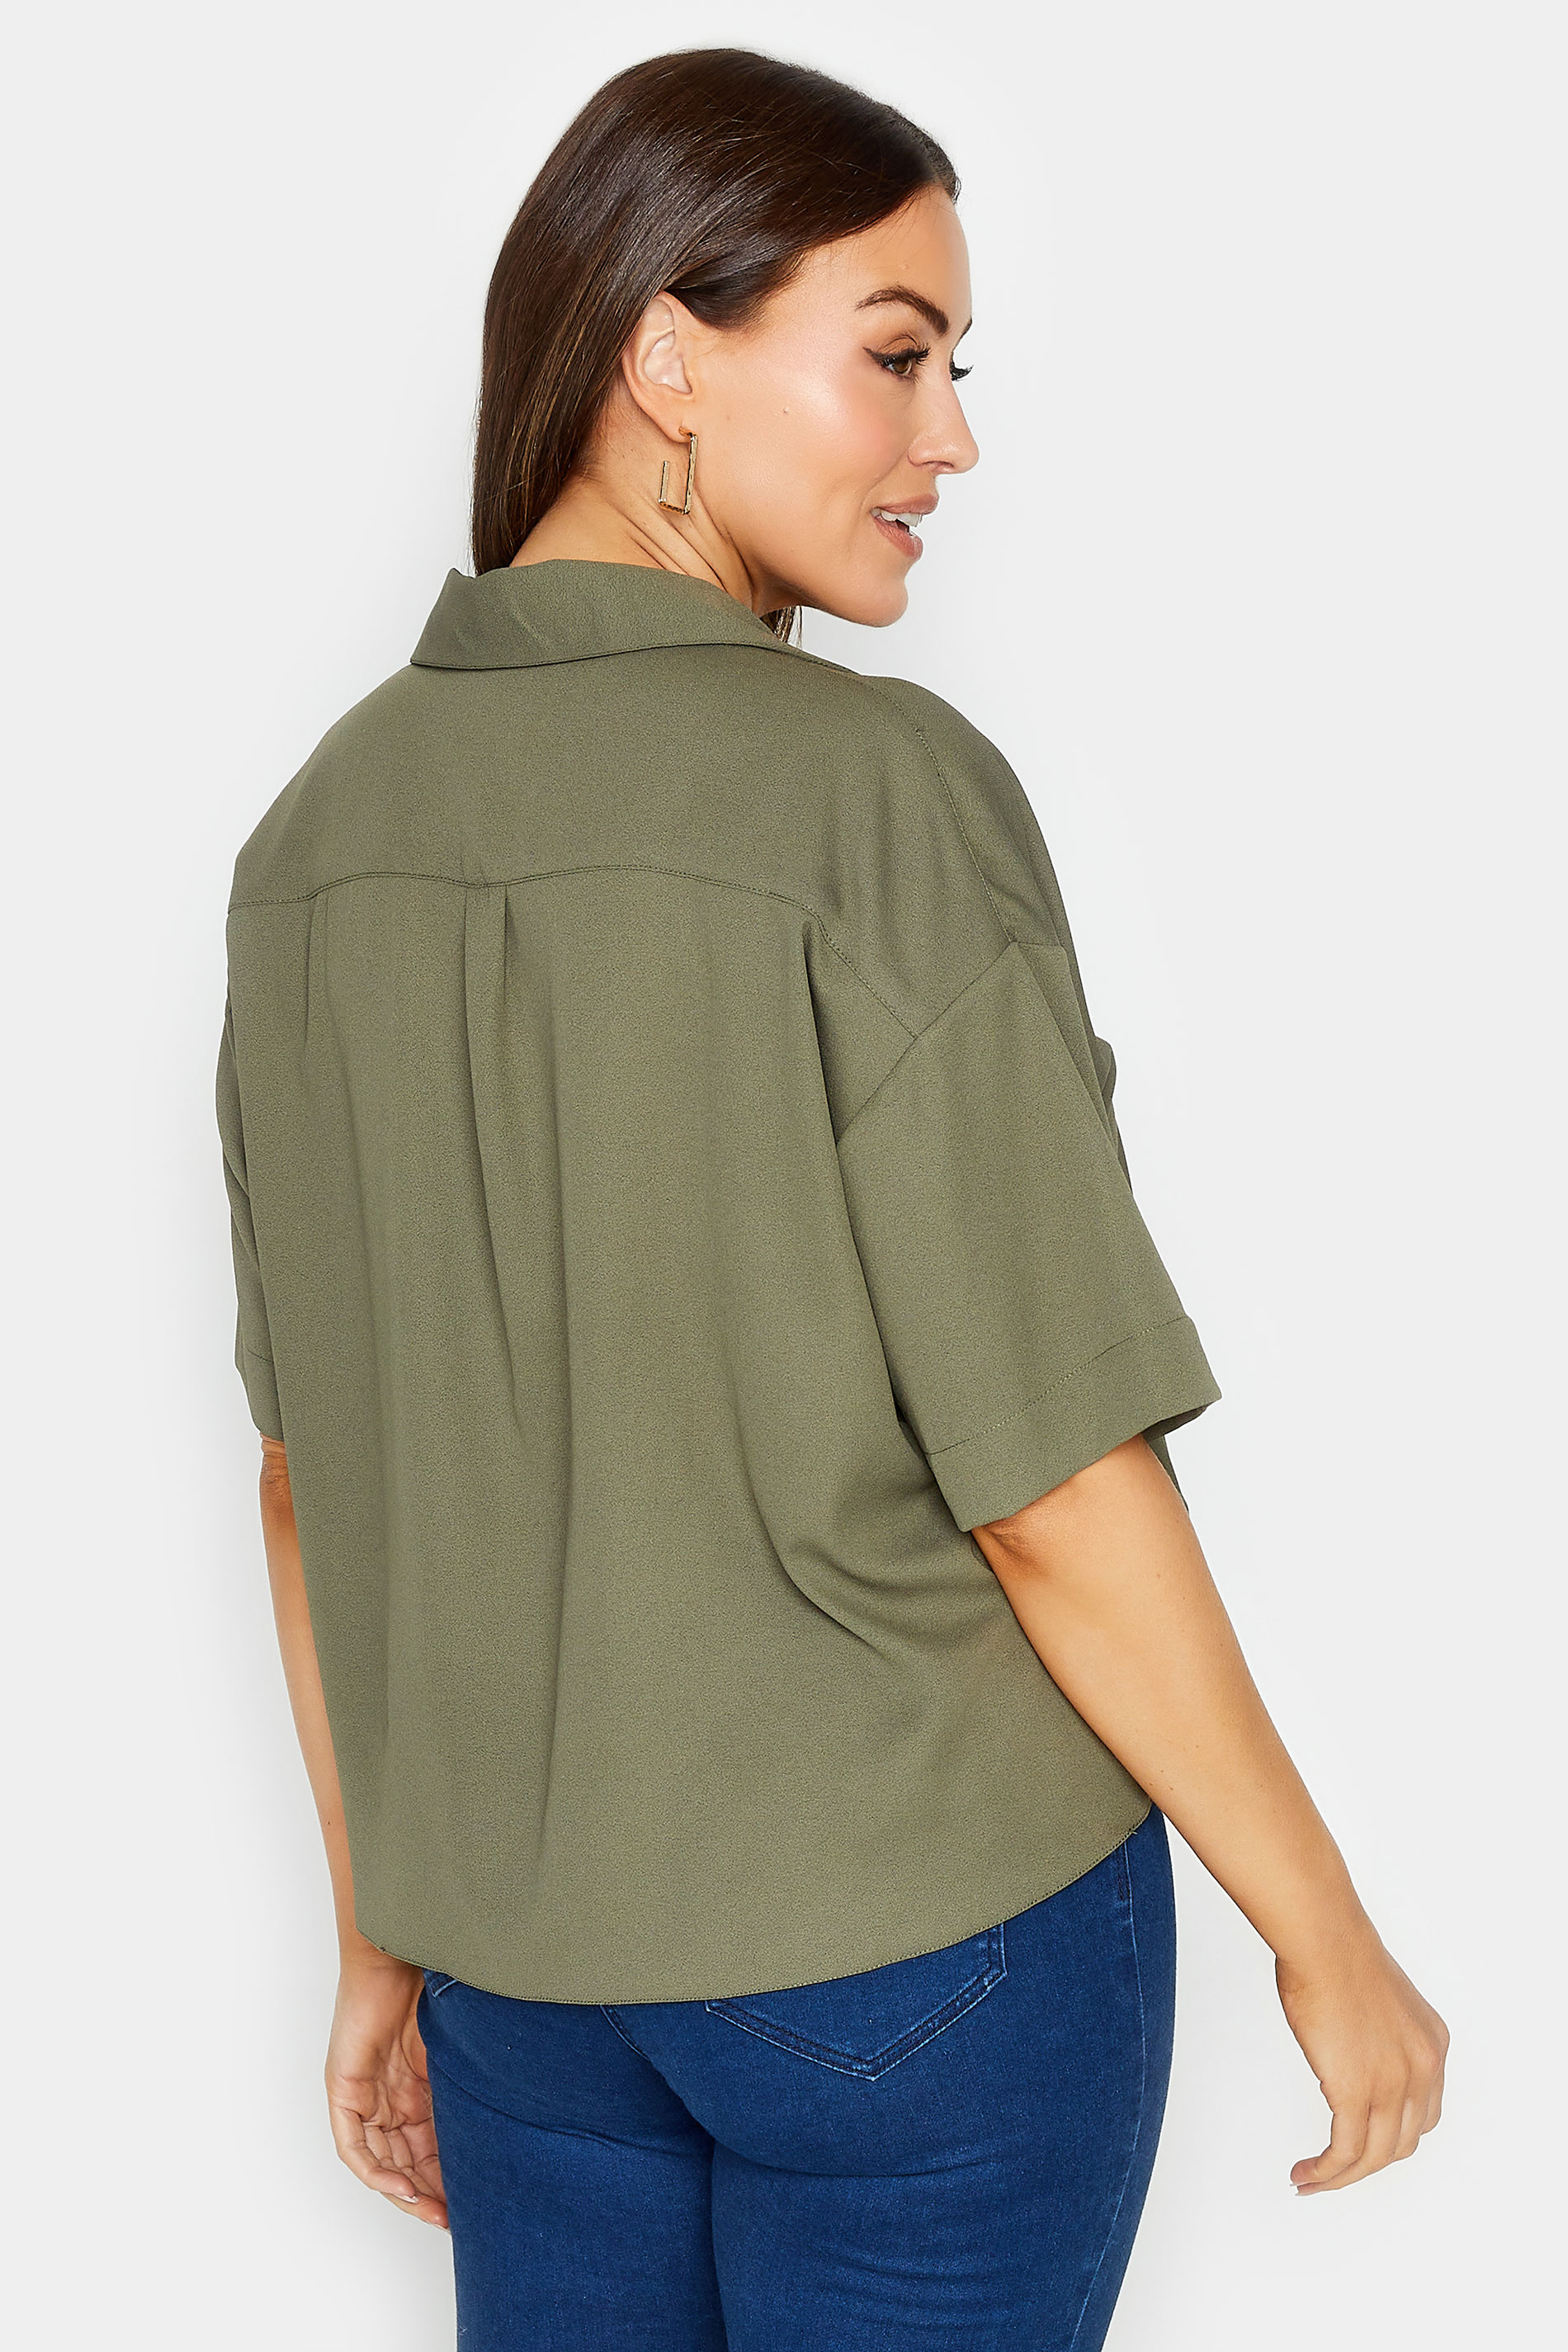 M&Co Khaki Green V-Neck Wrap Blouse | M&Co 3